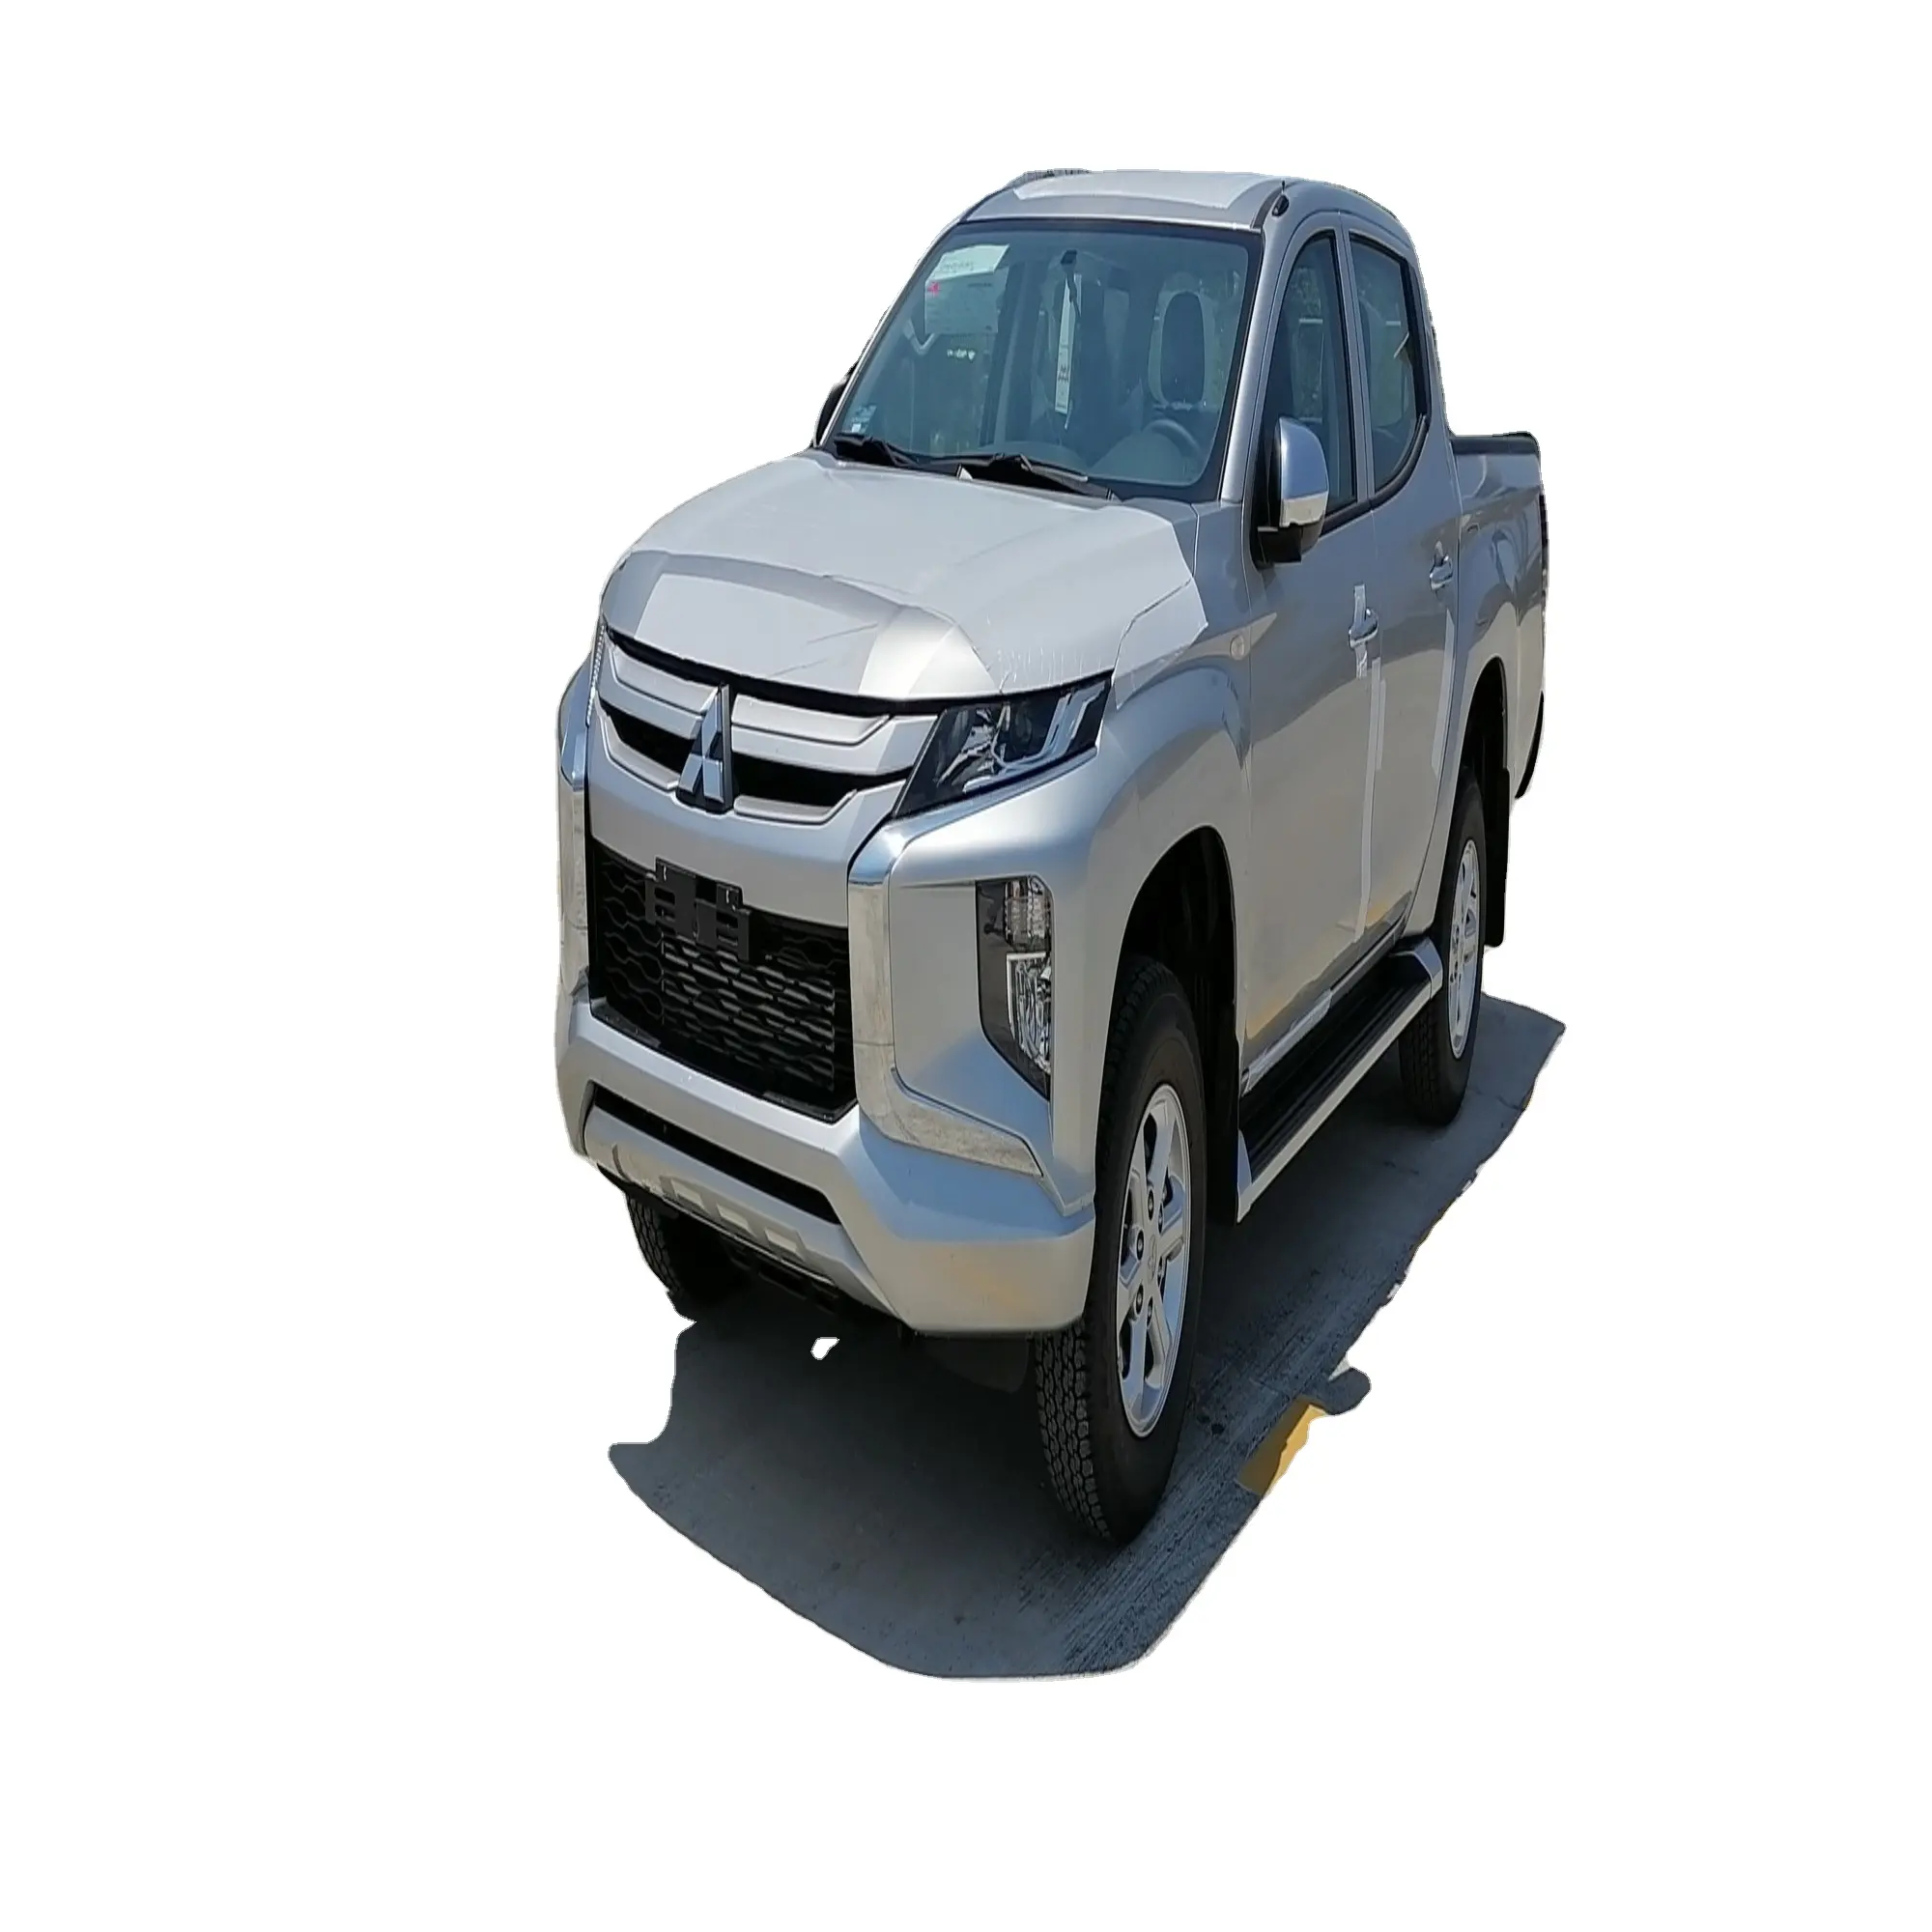 USED CARS 2022 Pick up Truck Mitsubishi L200